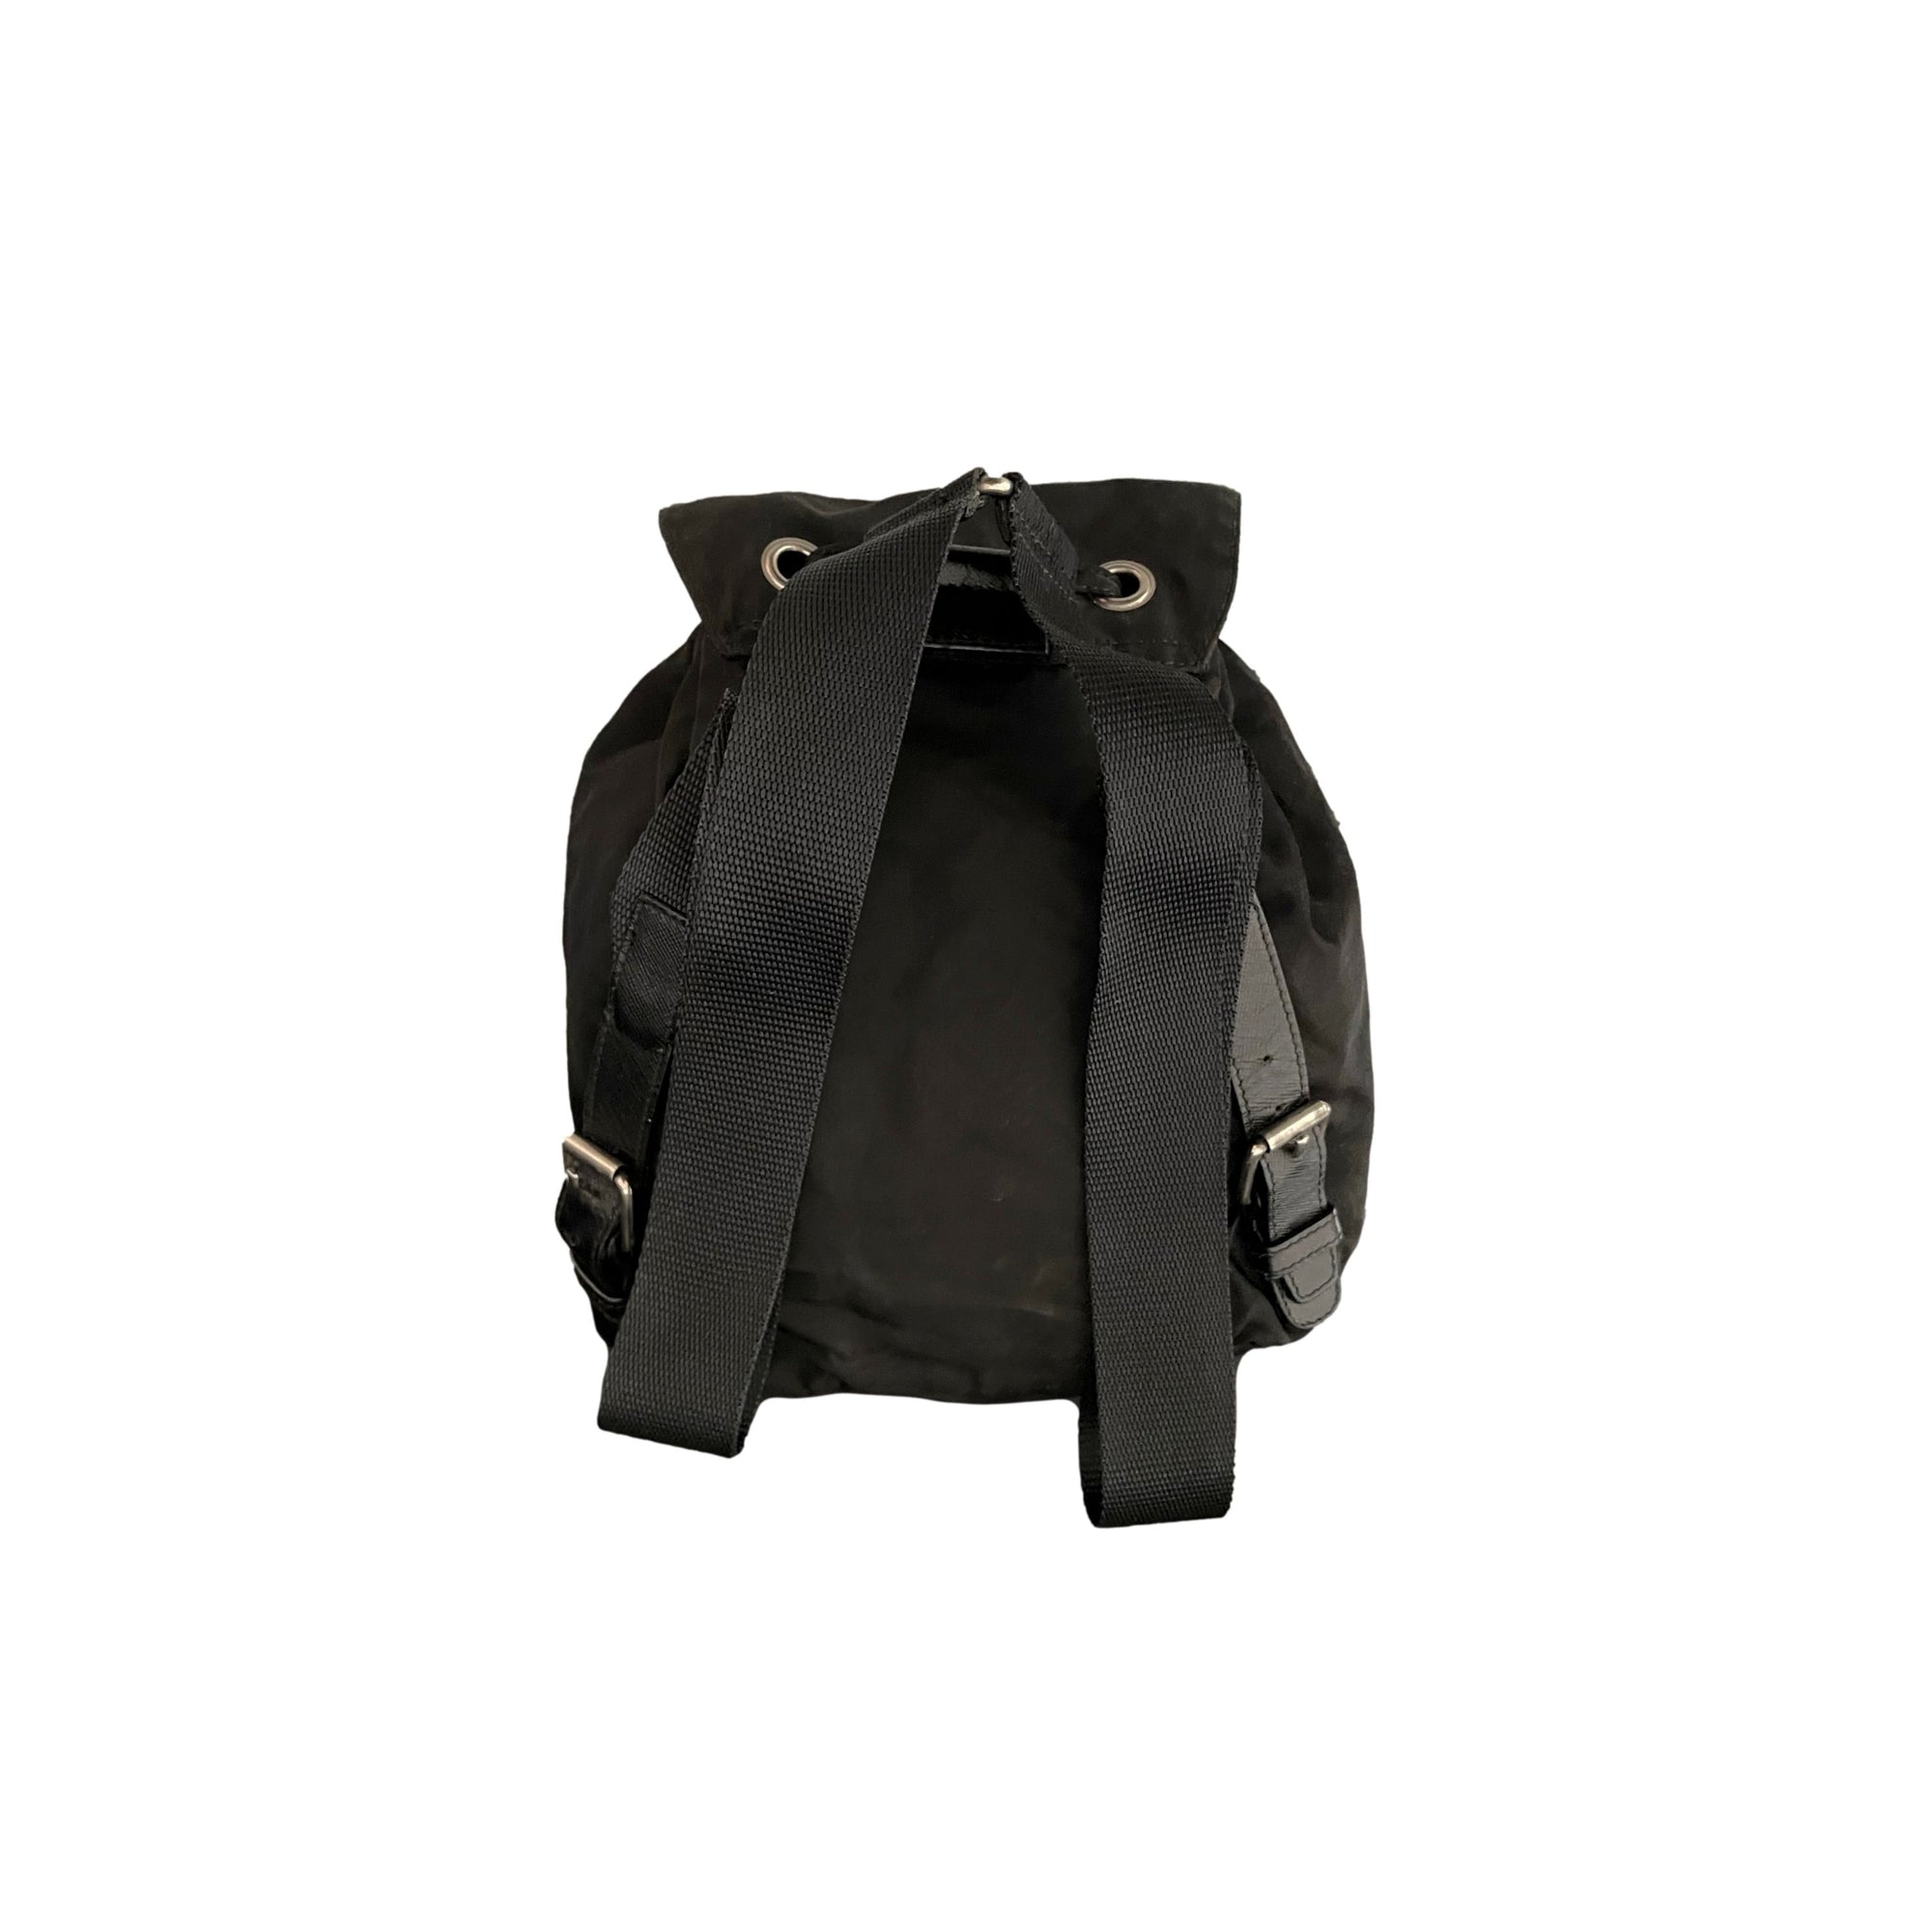 Prada Black Logo Mini Drawstring Backpack - Handbags